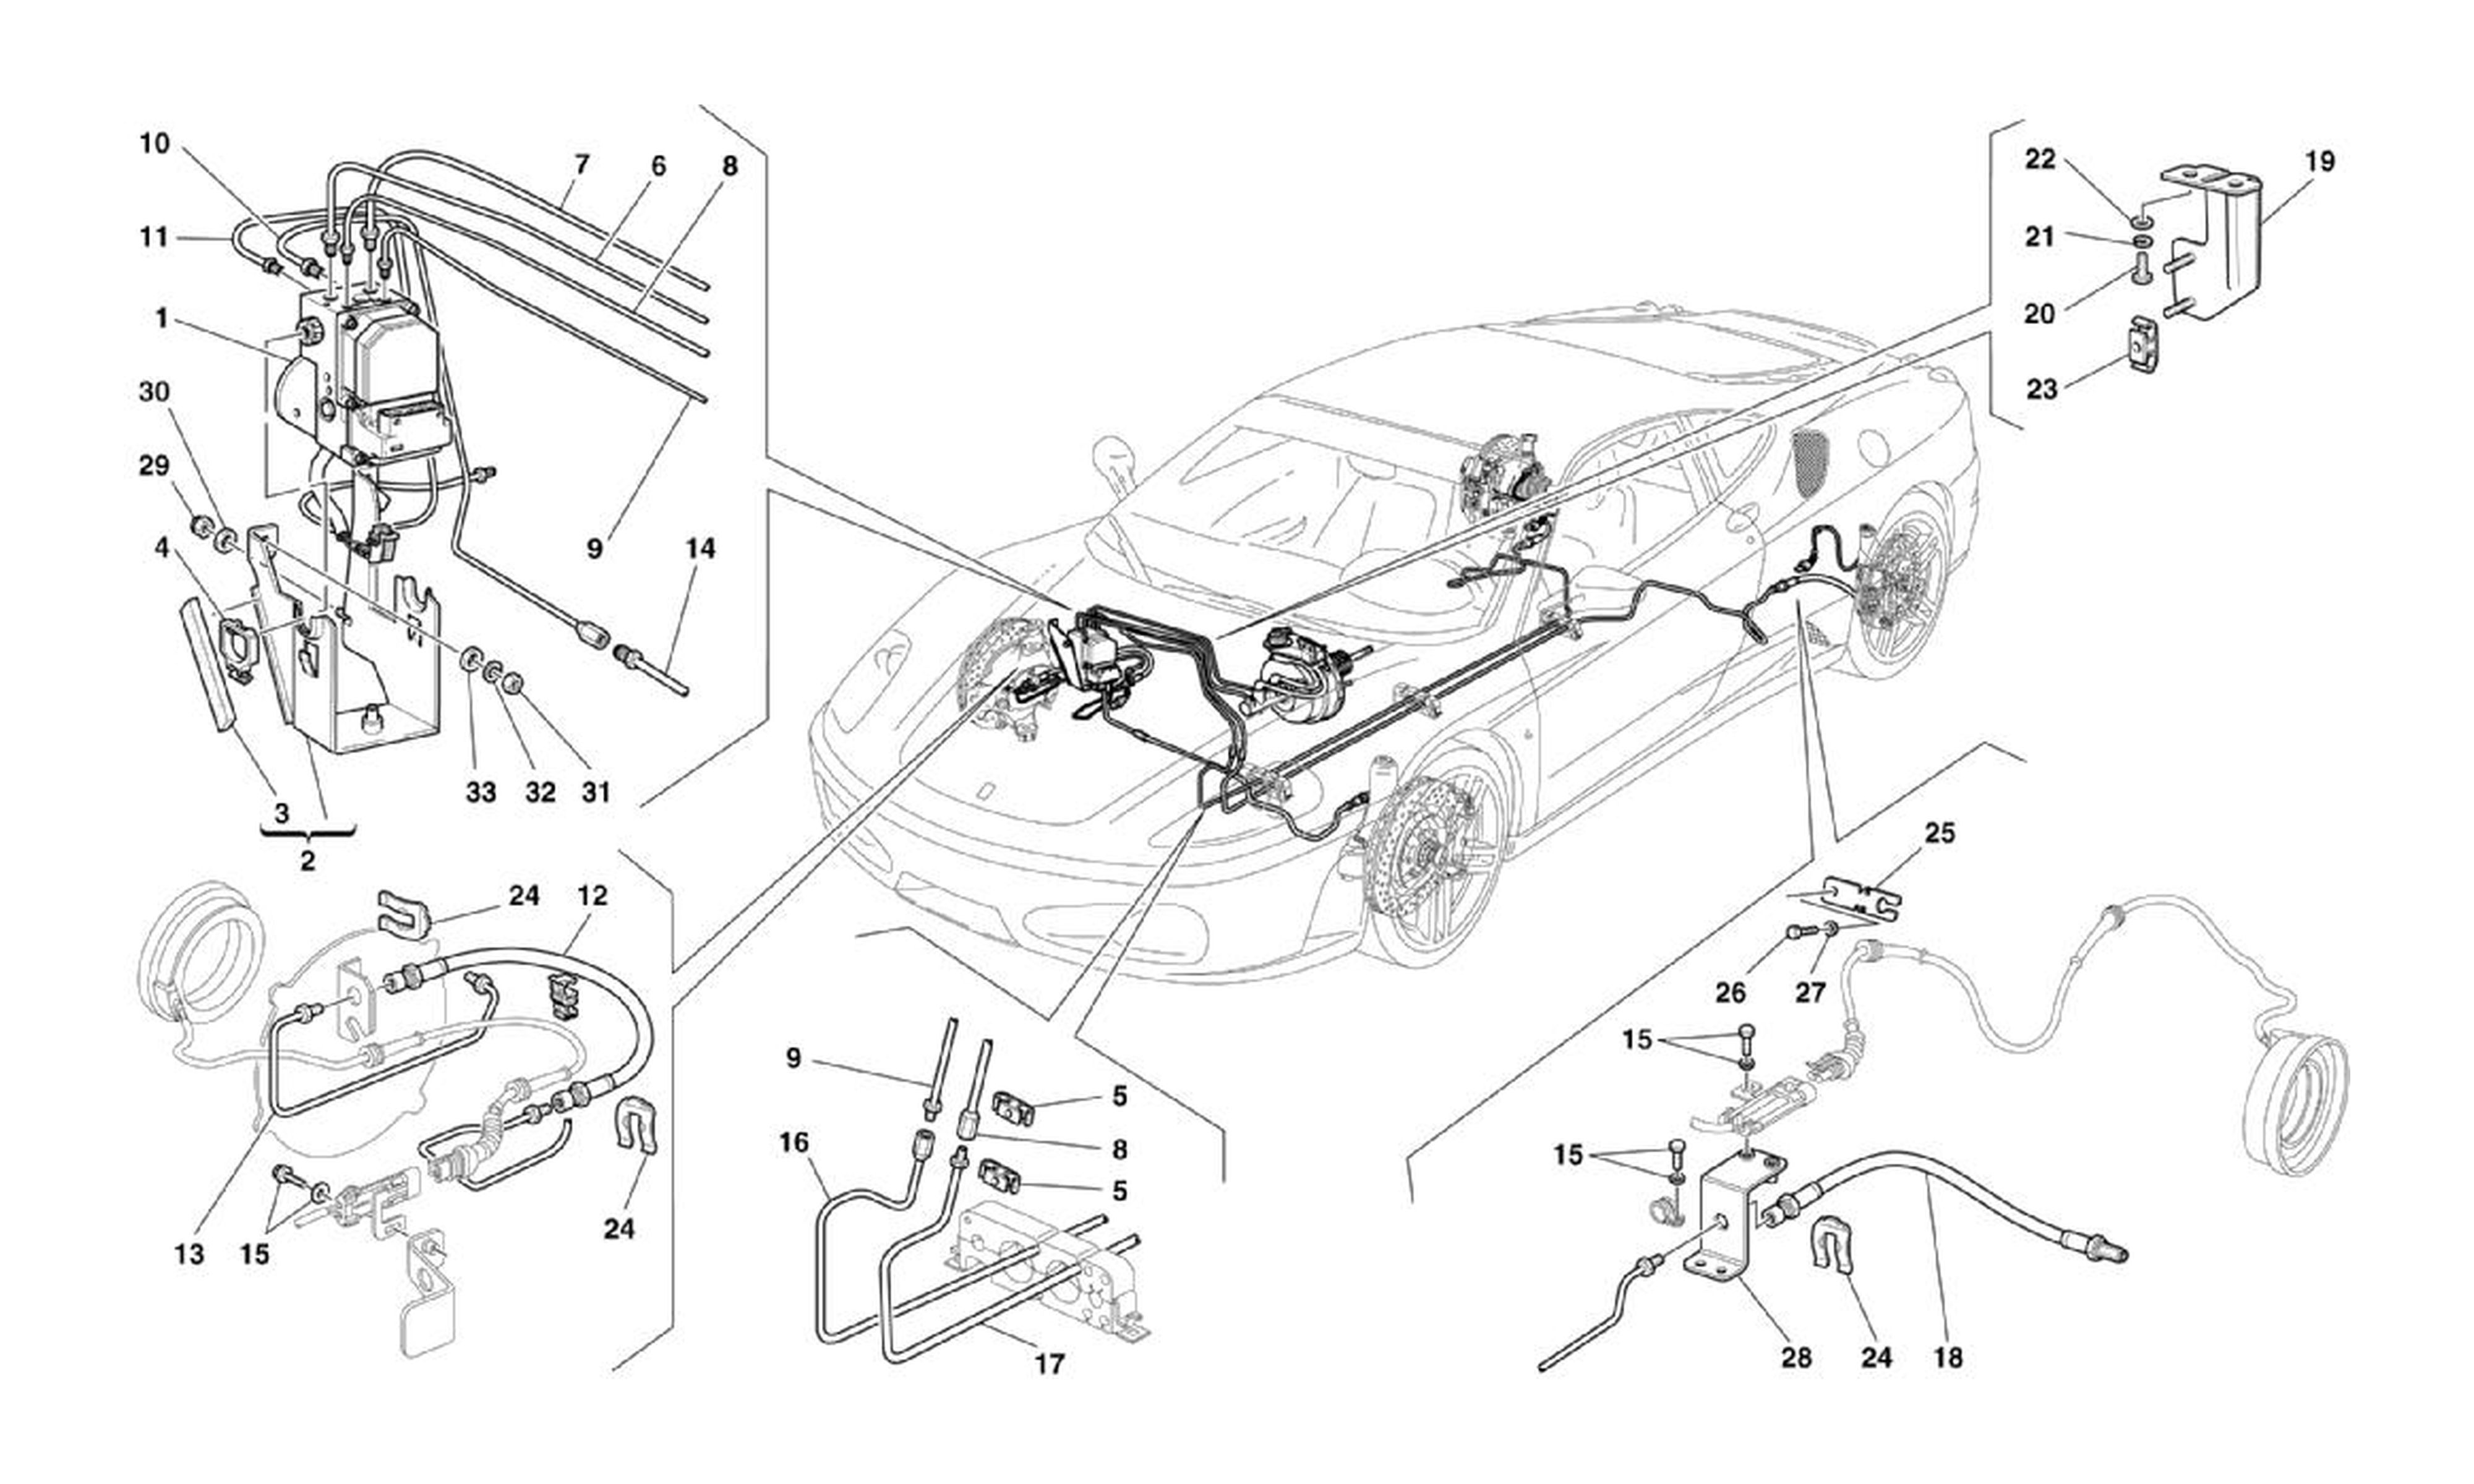 Schematic: Power Steering System